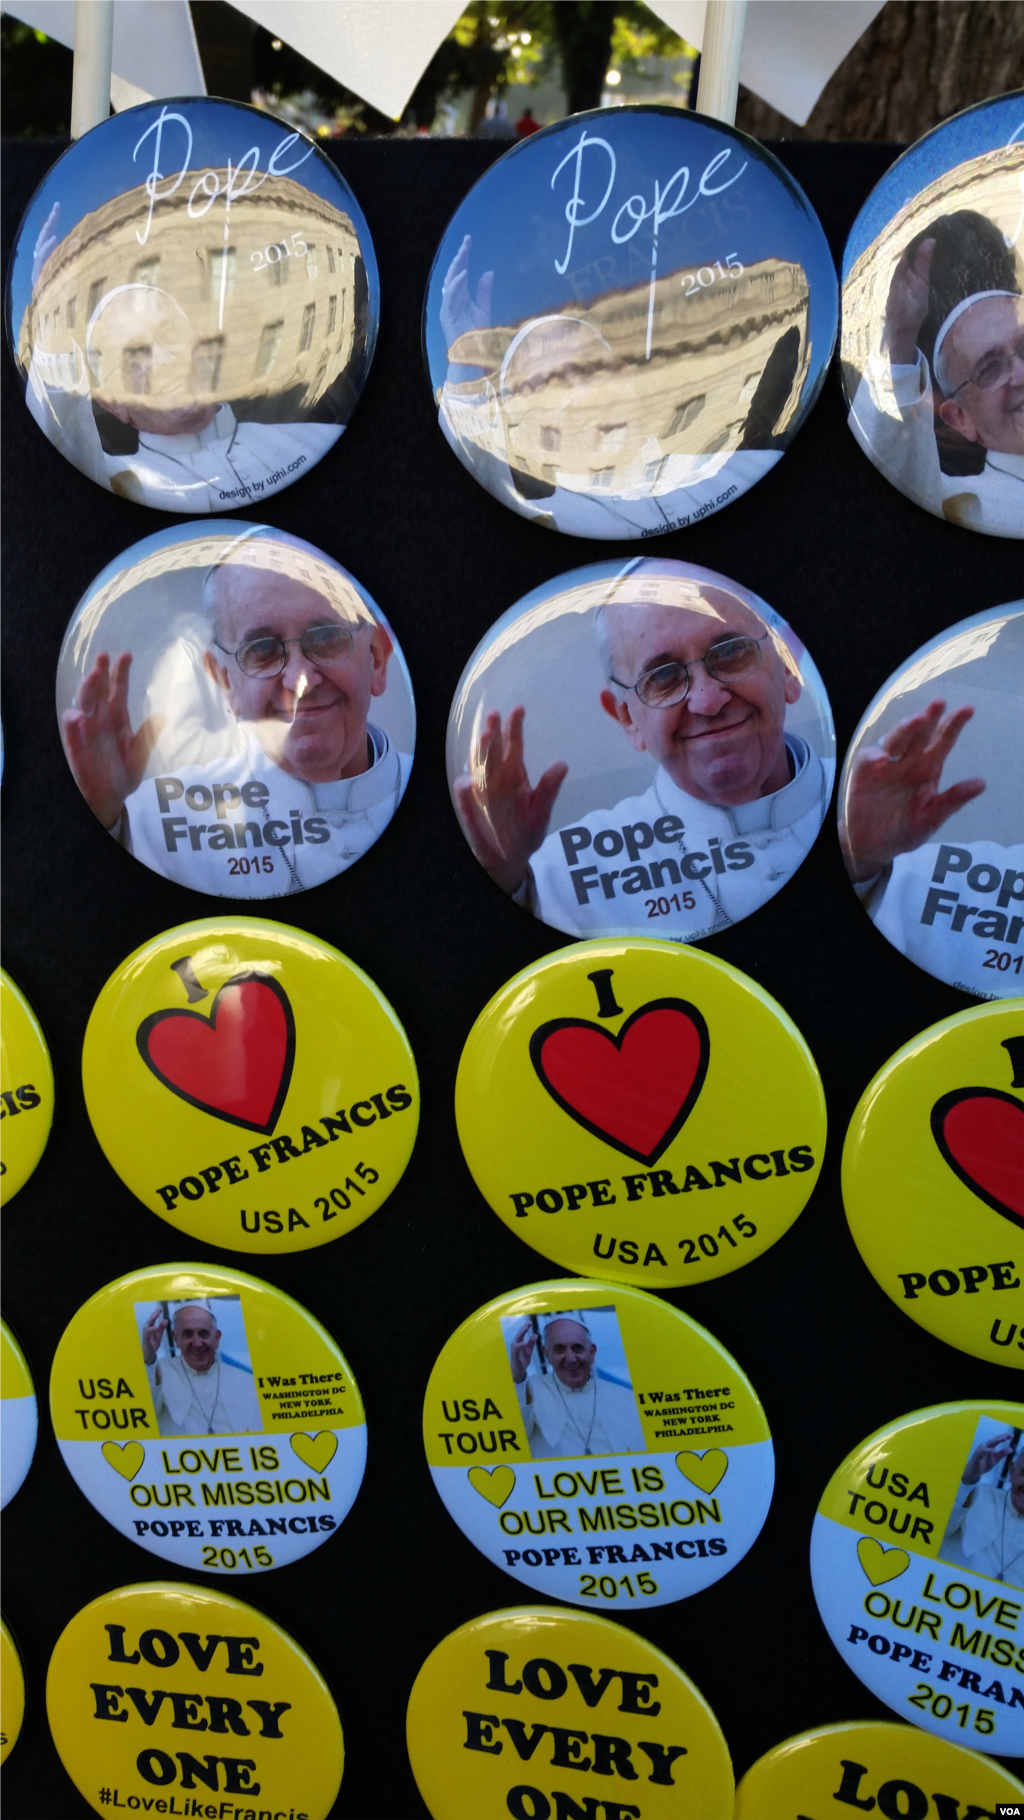 Pope Francis memorabilia for sale, Washington, Sept. 23, 2015. (Richard Green/VOA)